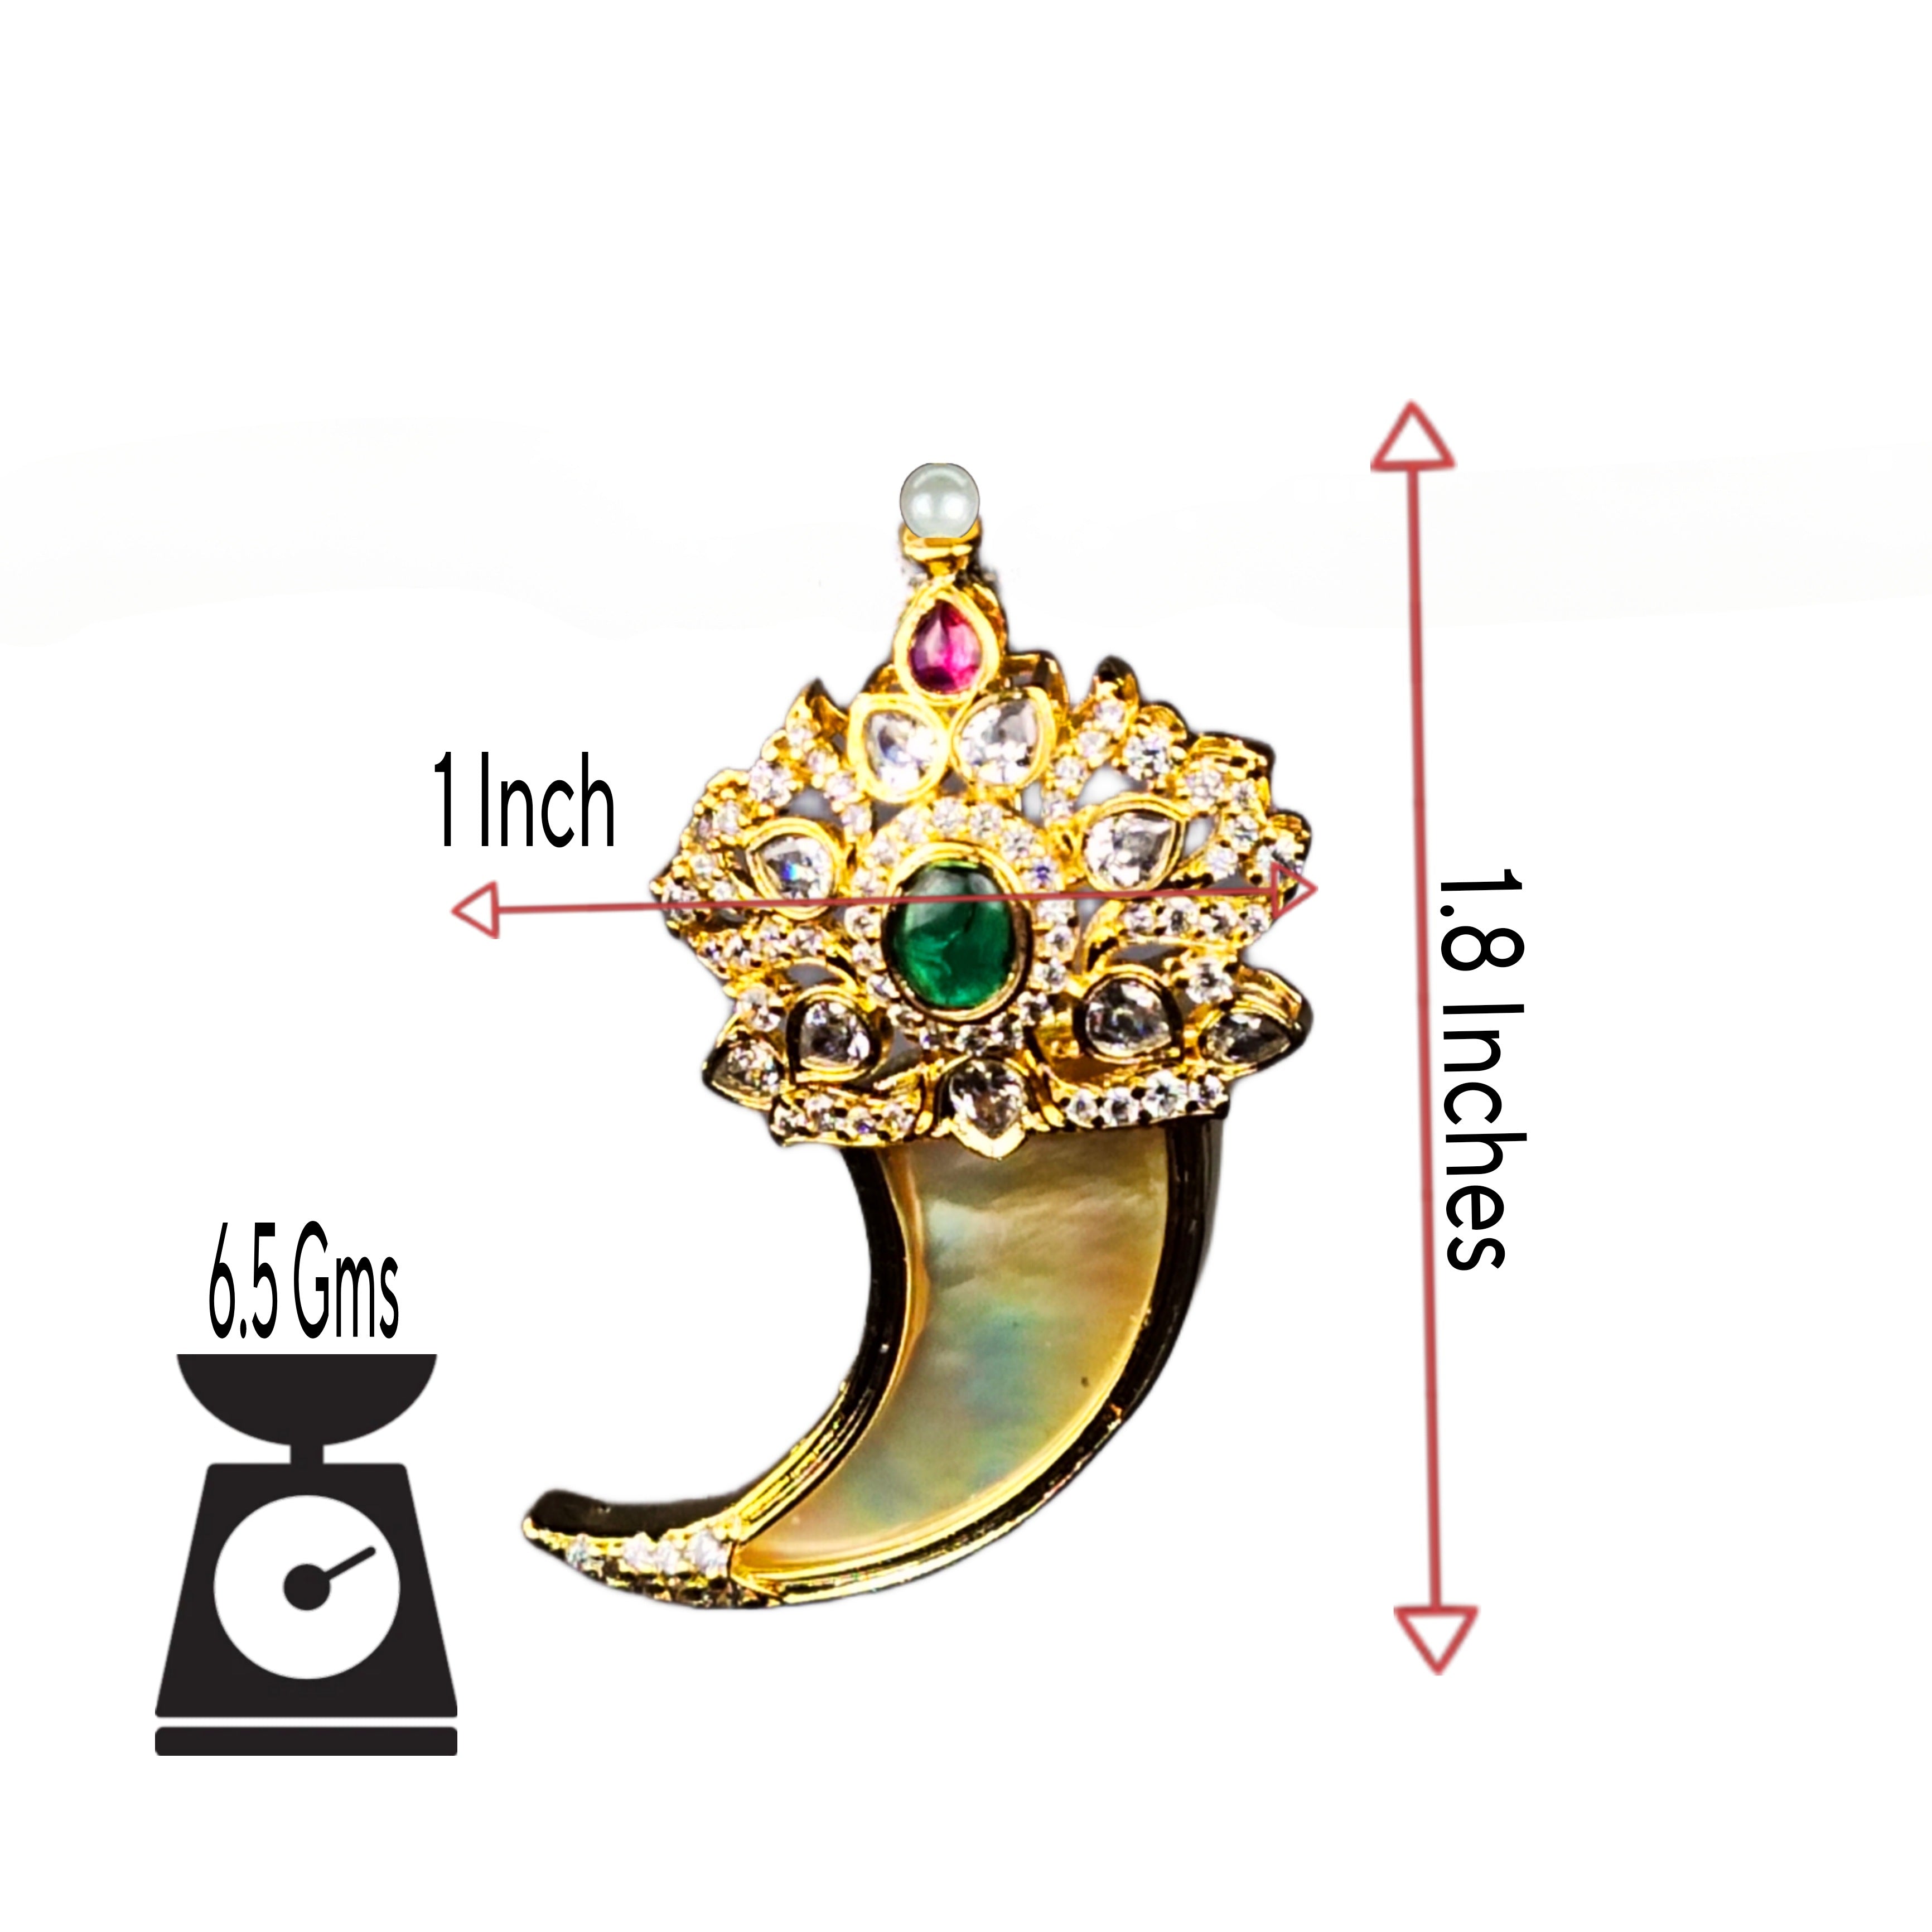 Freemen Lion dubl nail pendantn with gold plated for Men - FMGP63 – Freemen®